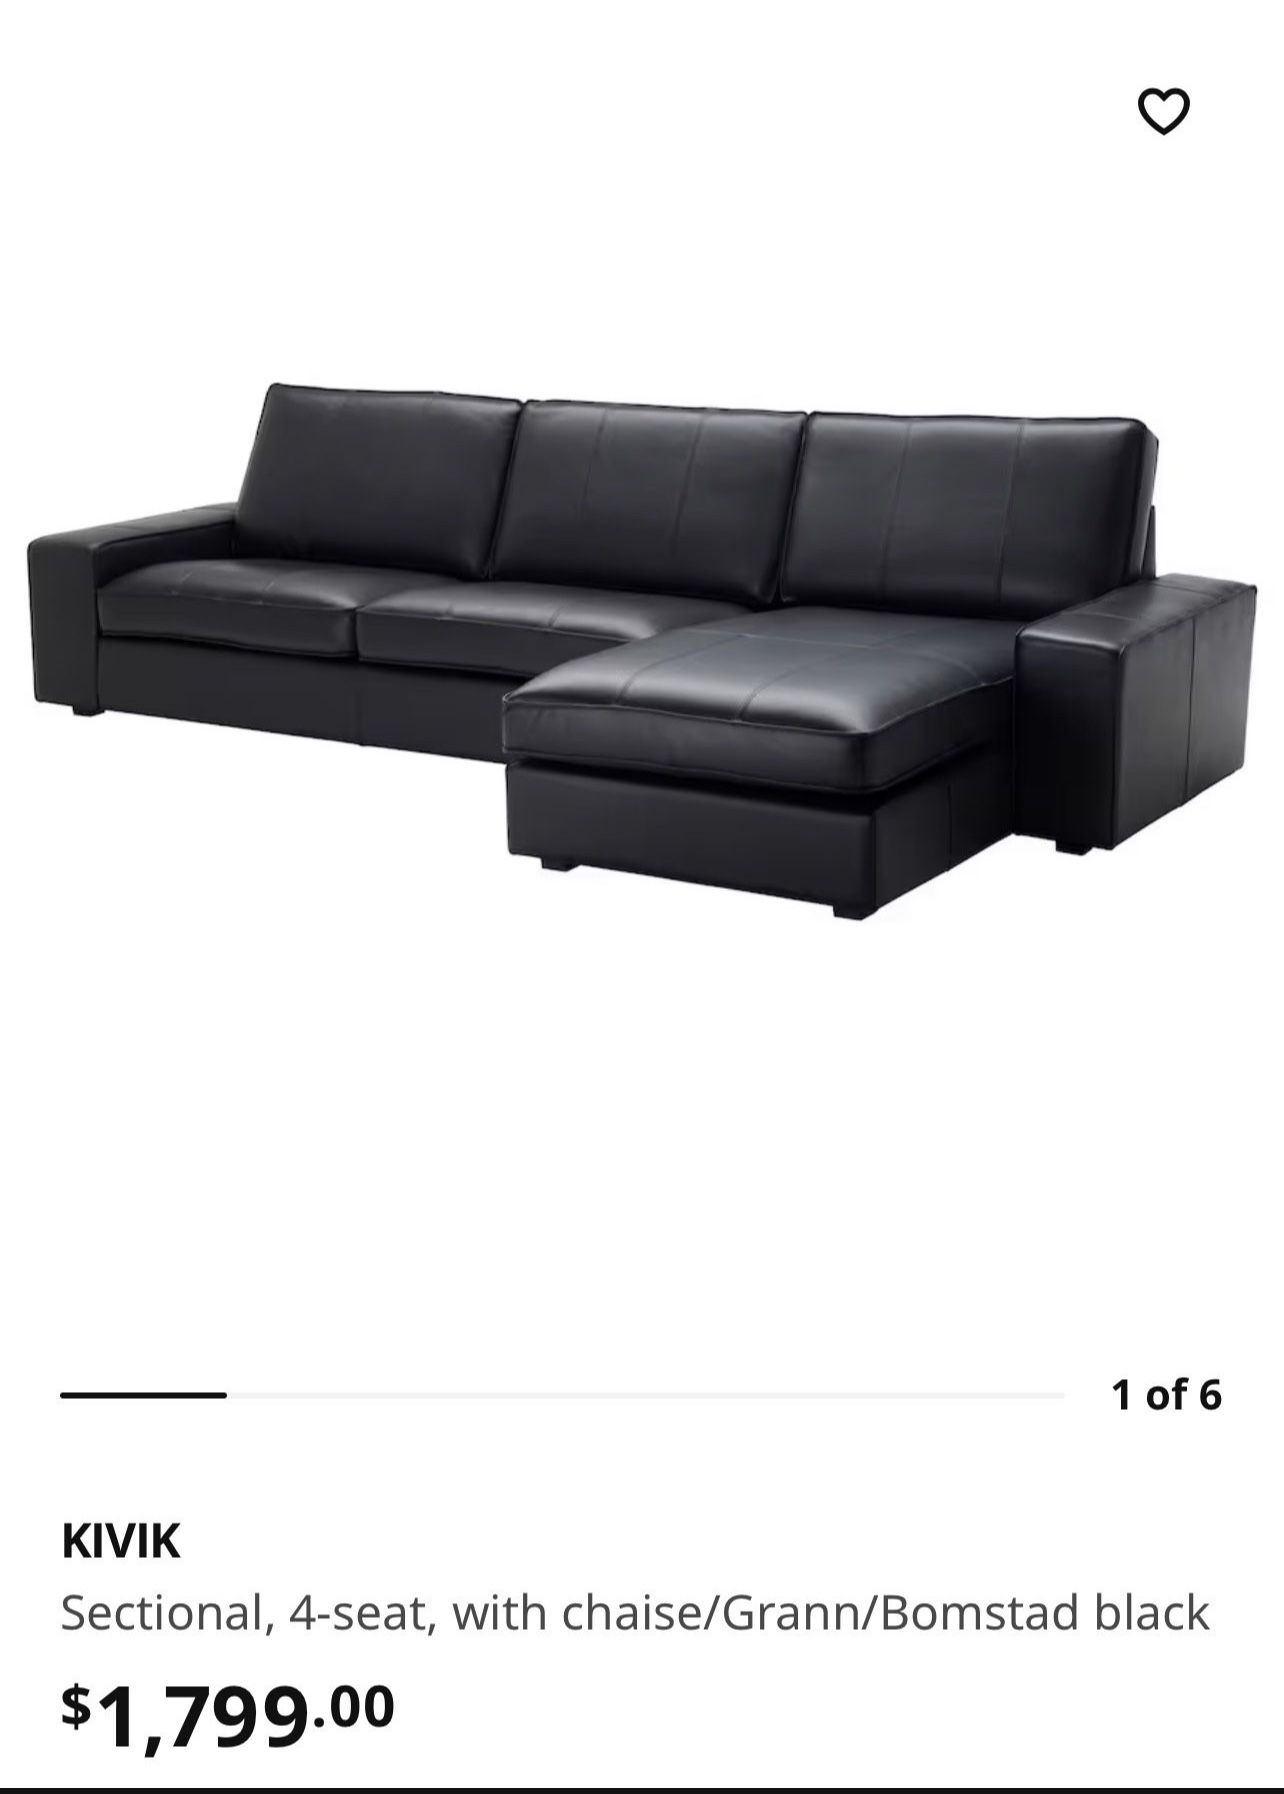 IKEA KIVIK black Leather Sofa With Chaise Liunger